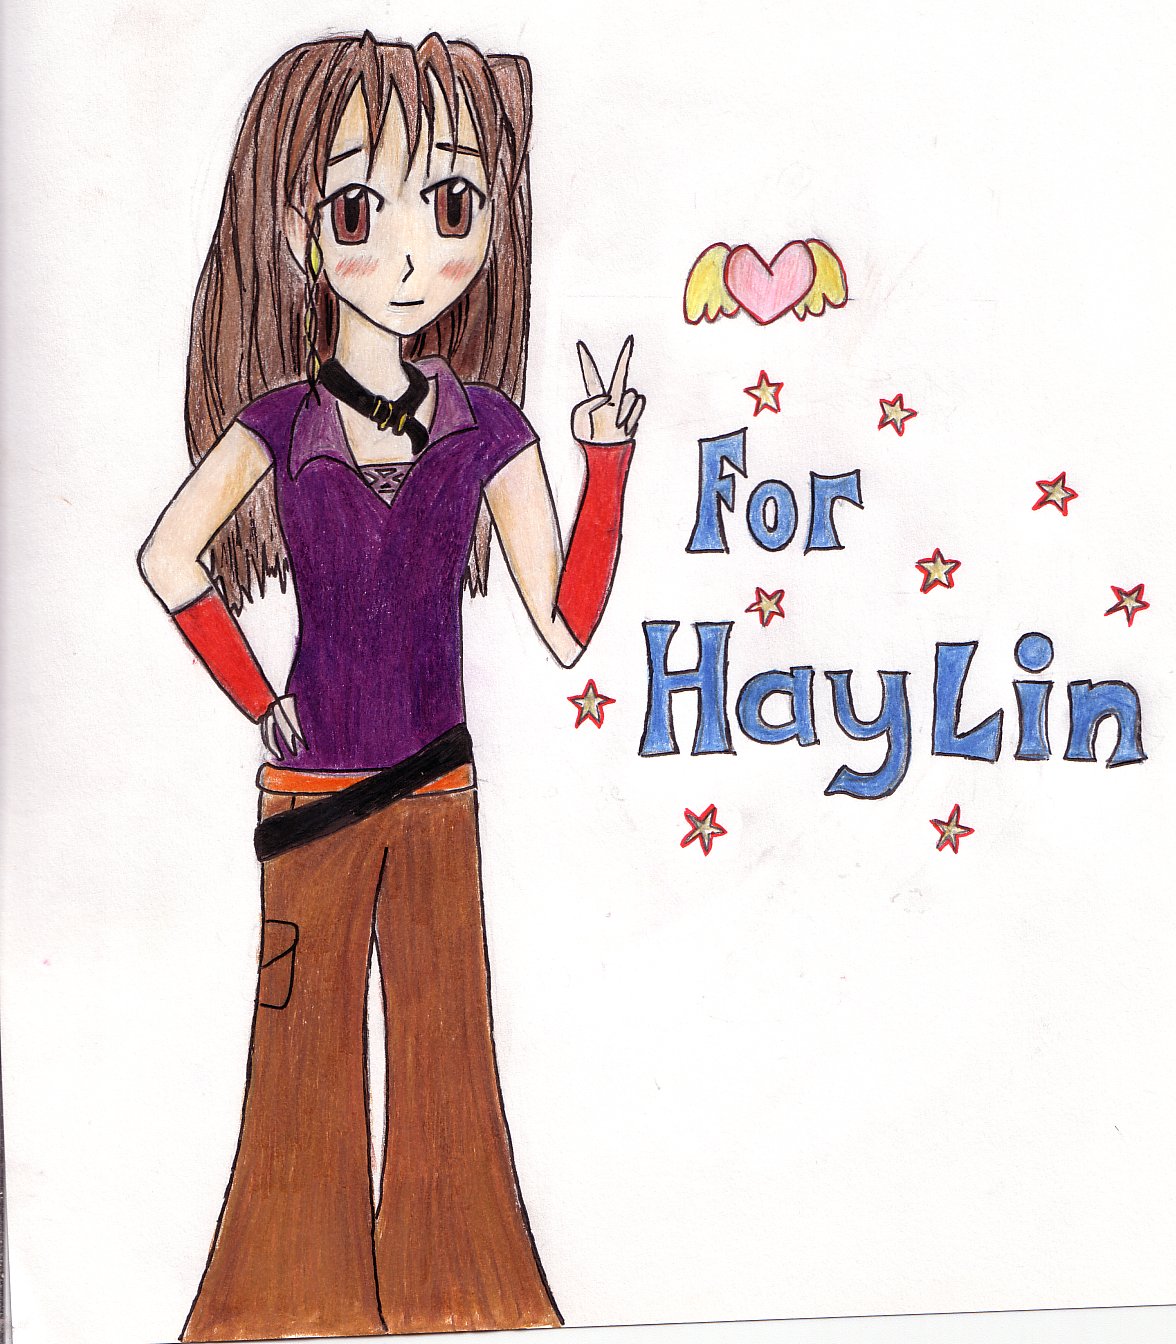 ** For Haylin** by man_in_a_bra